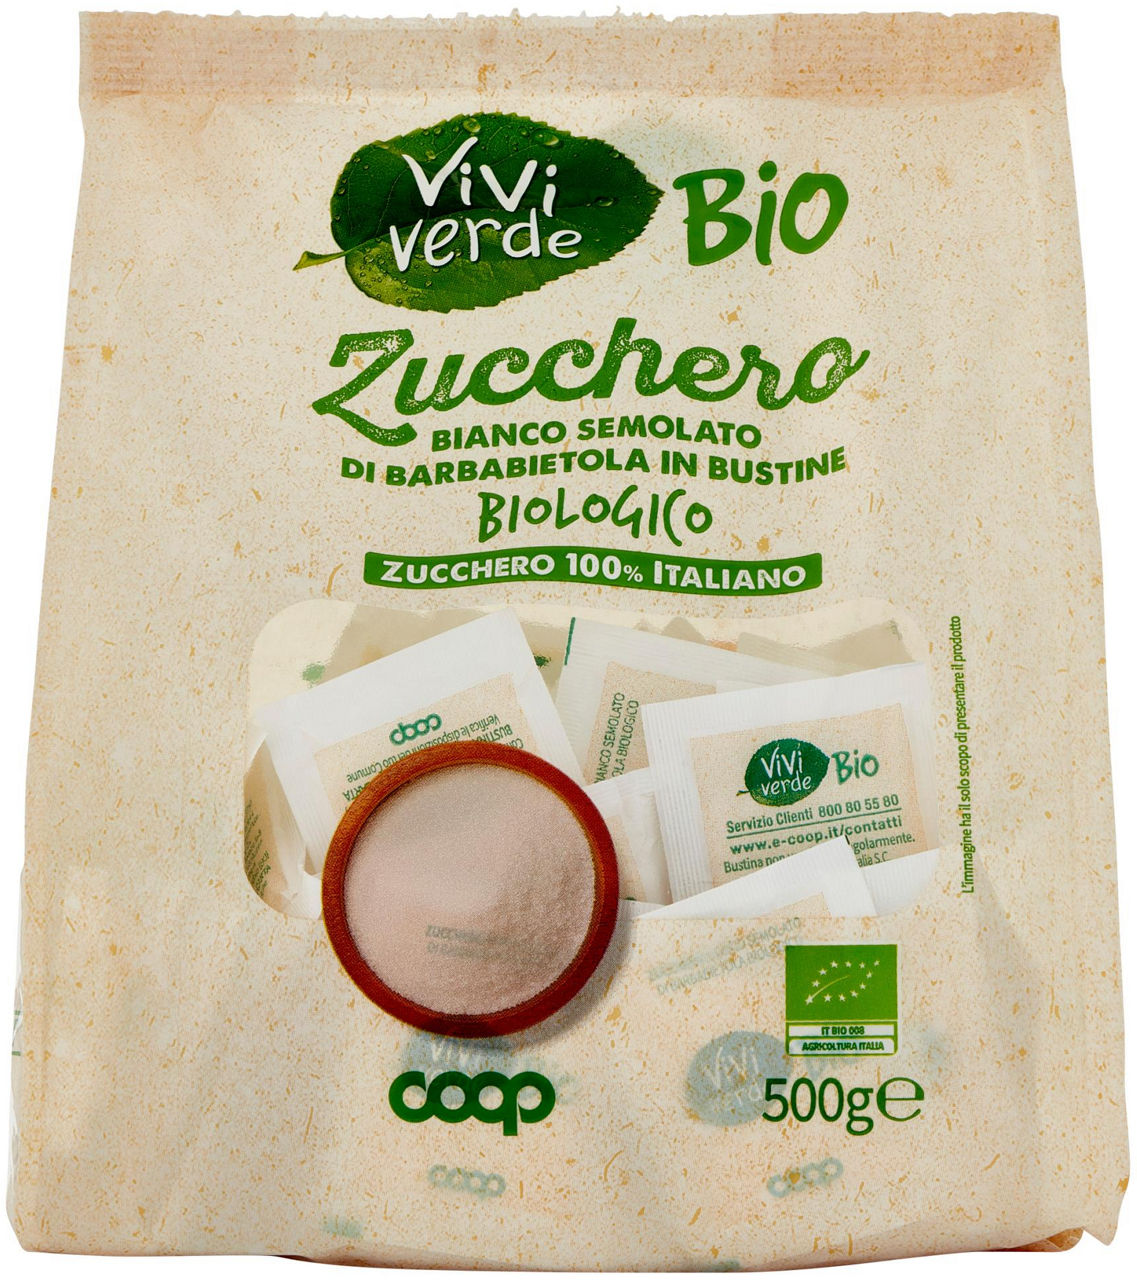 Zucchero semolato viviverde biocoop in bustine sacchetto g 500